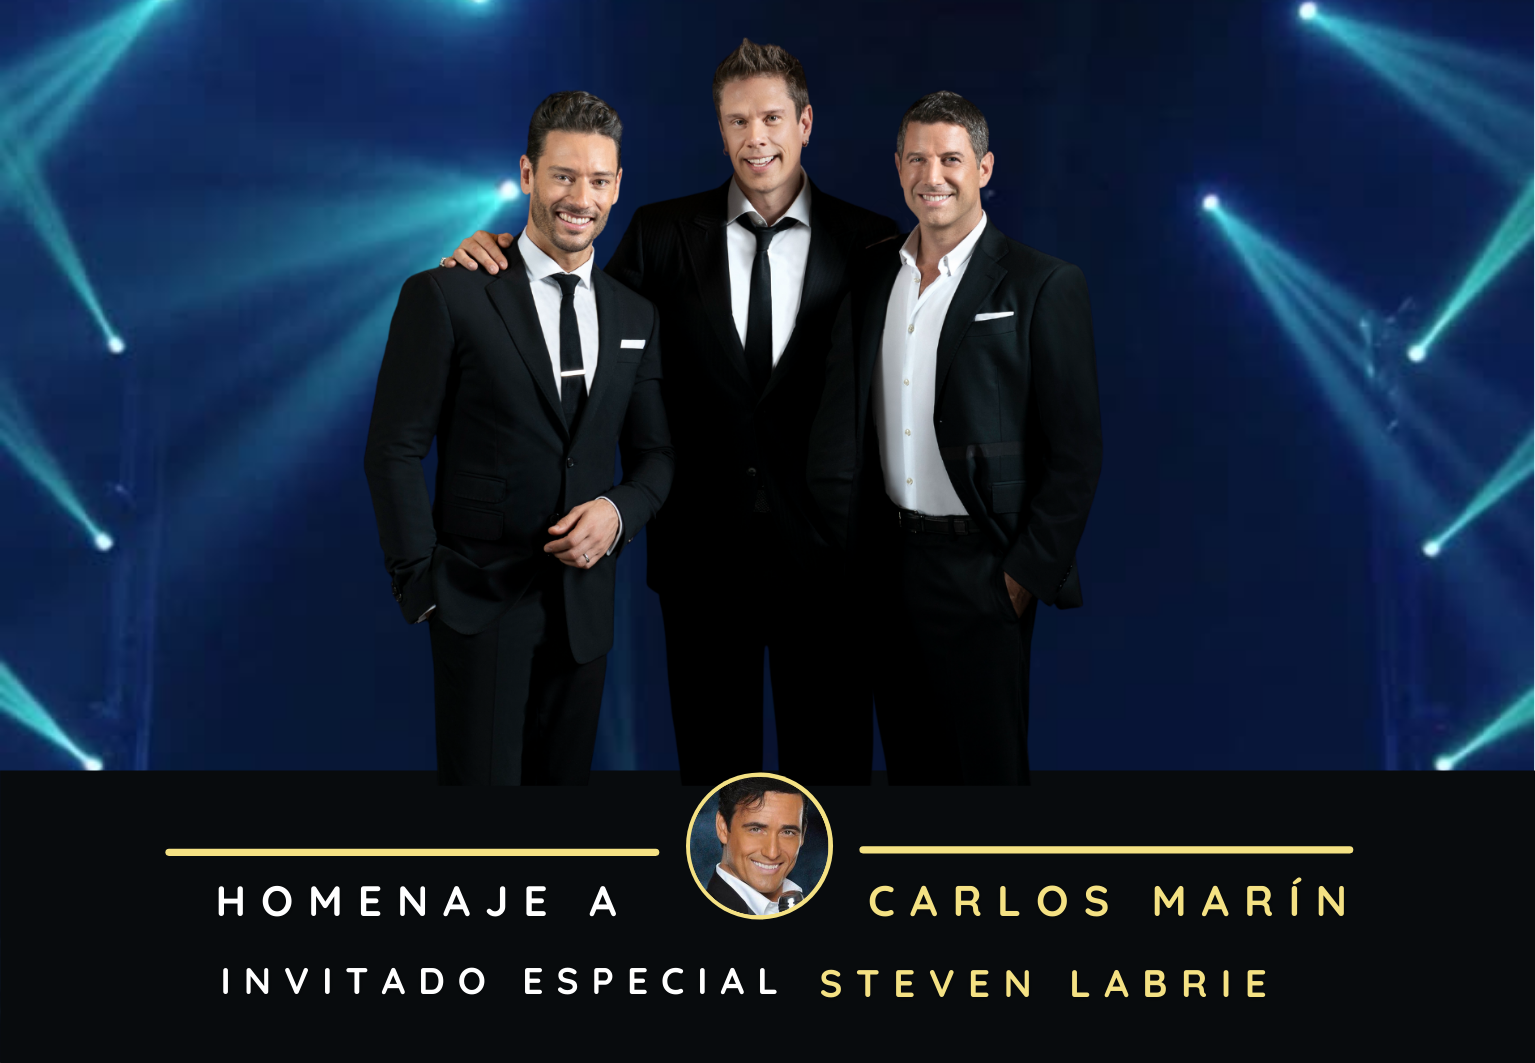 IL DIVO EN MADRID con "Greatest Hits Tour" homenaje a Carlos Marín